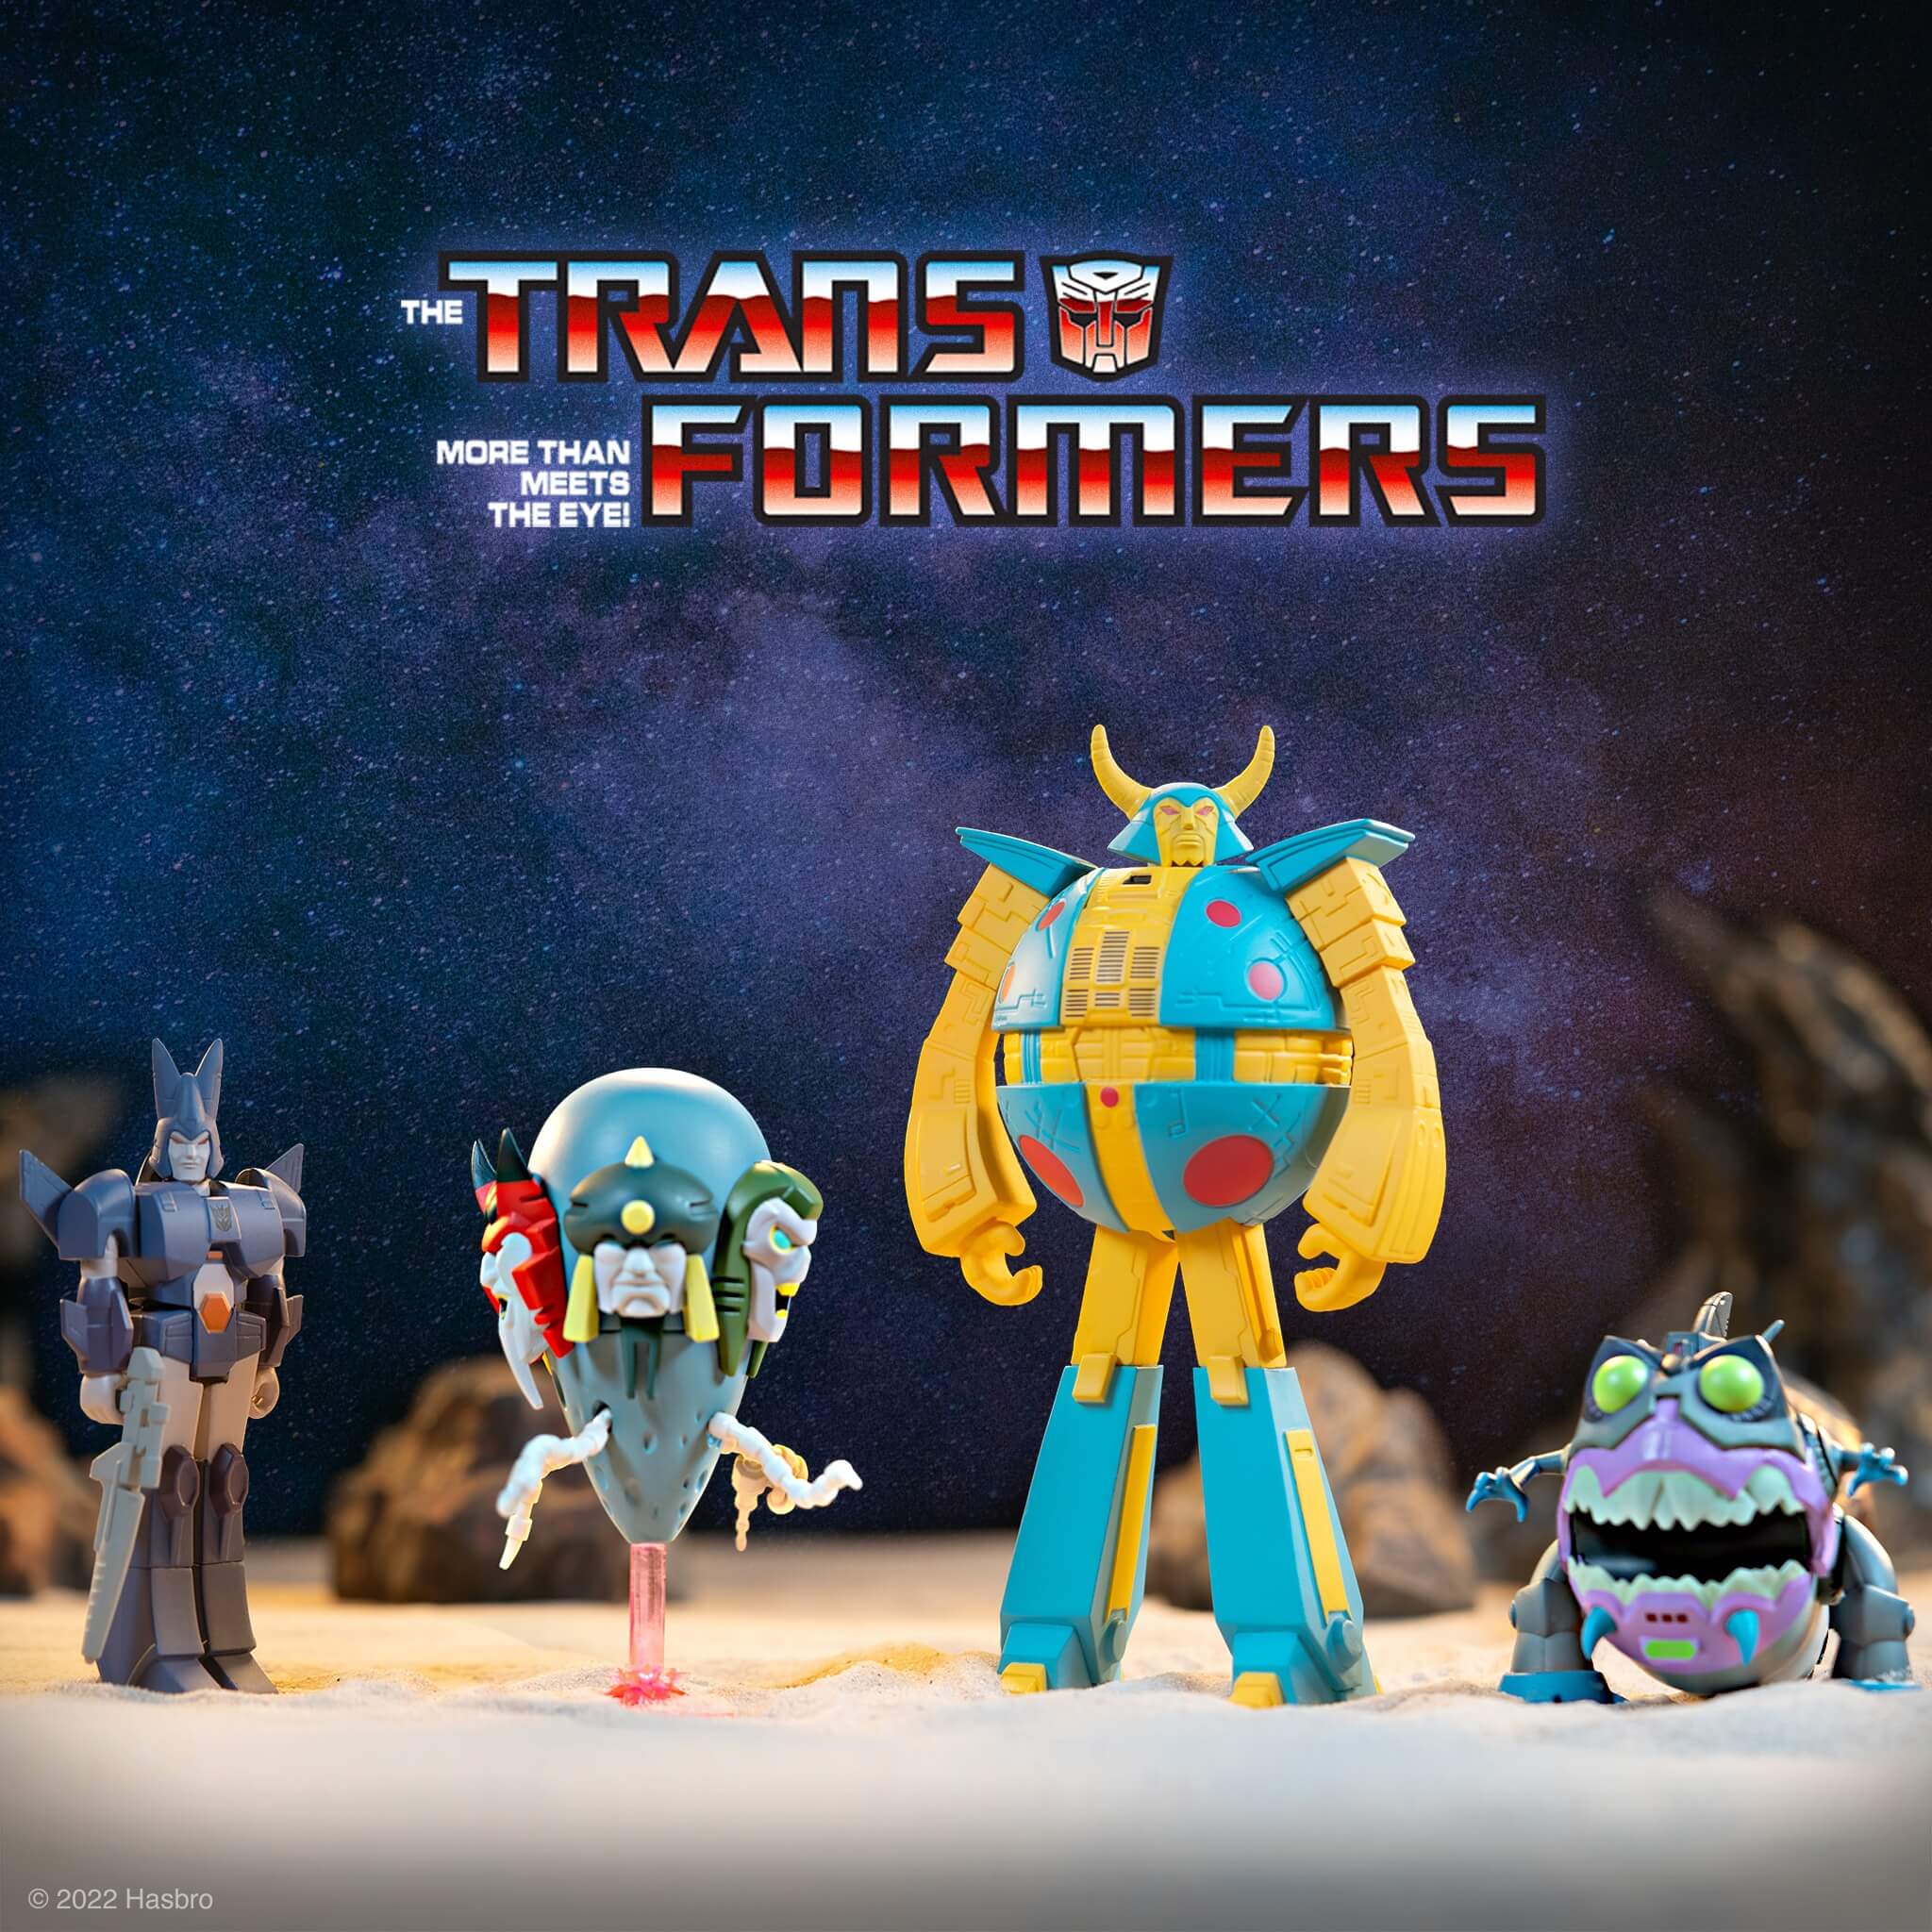 Transformers ReAction Figures Wave 6 - Set of 6